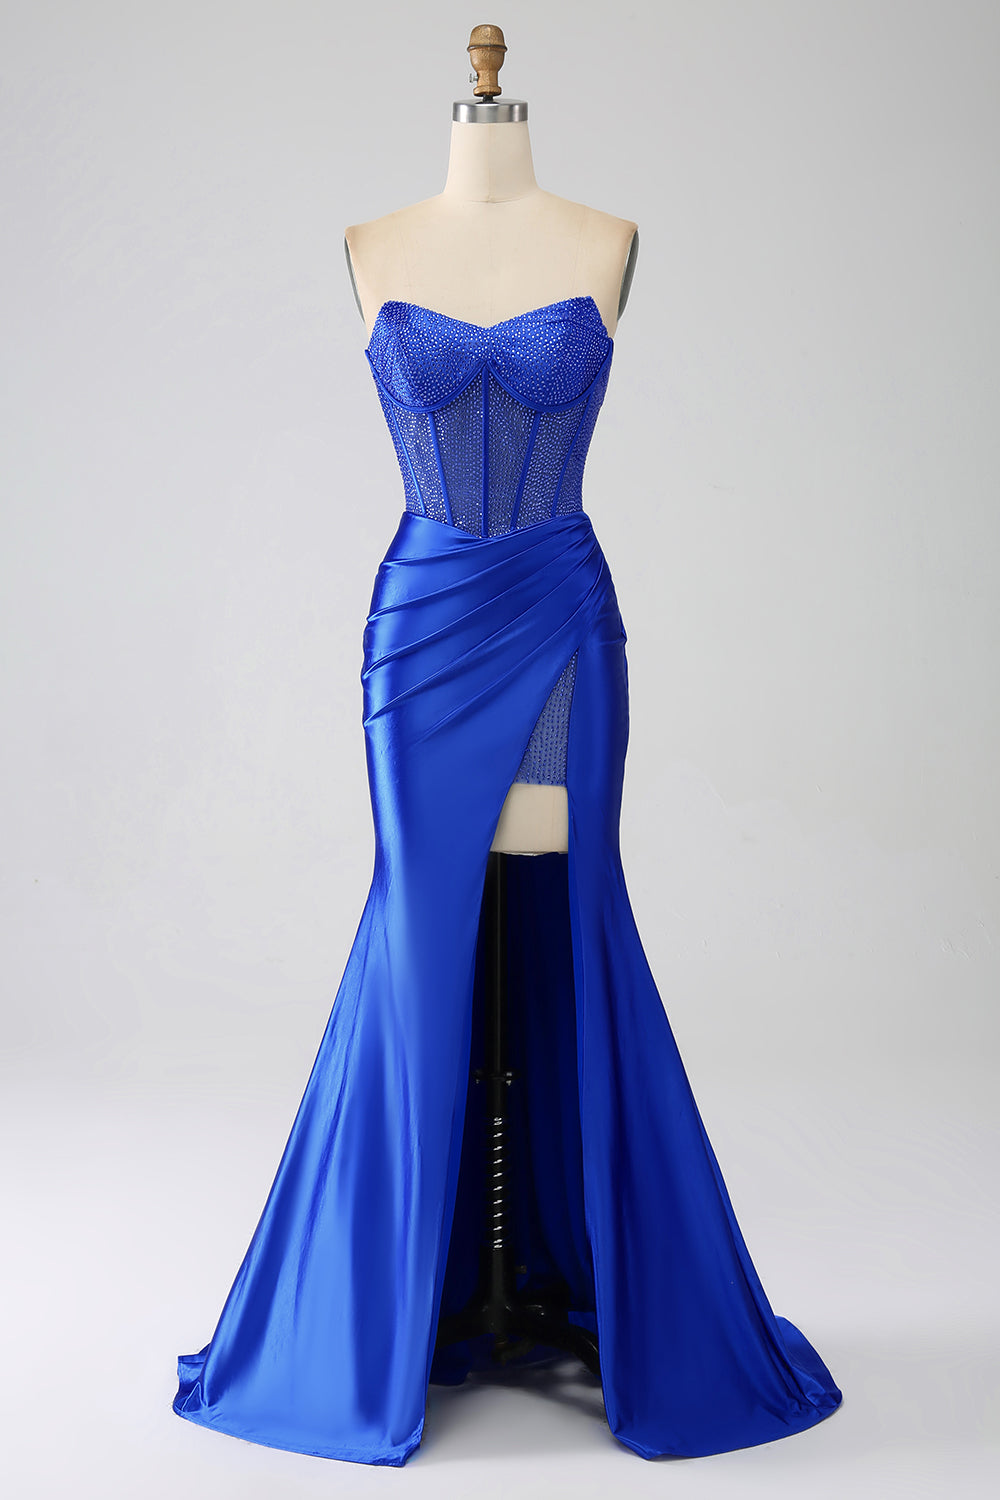 Zapakasa Women Royal Blue Corset Prom Dress with Beading Mermaid Strapless  Evening Dress with Ruffles